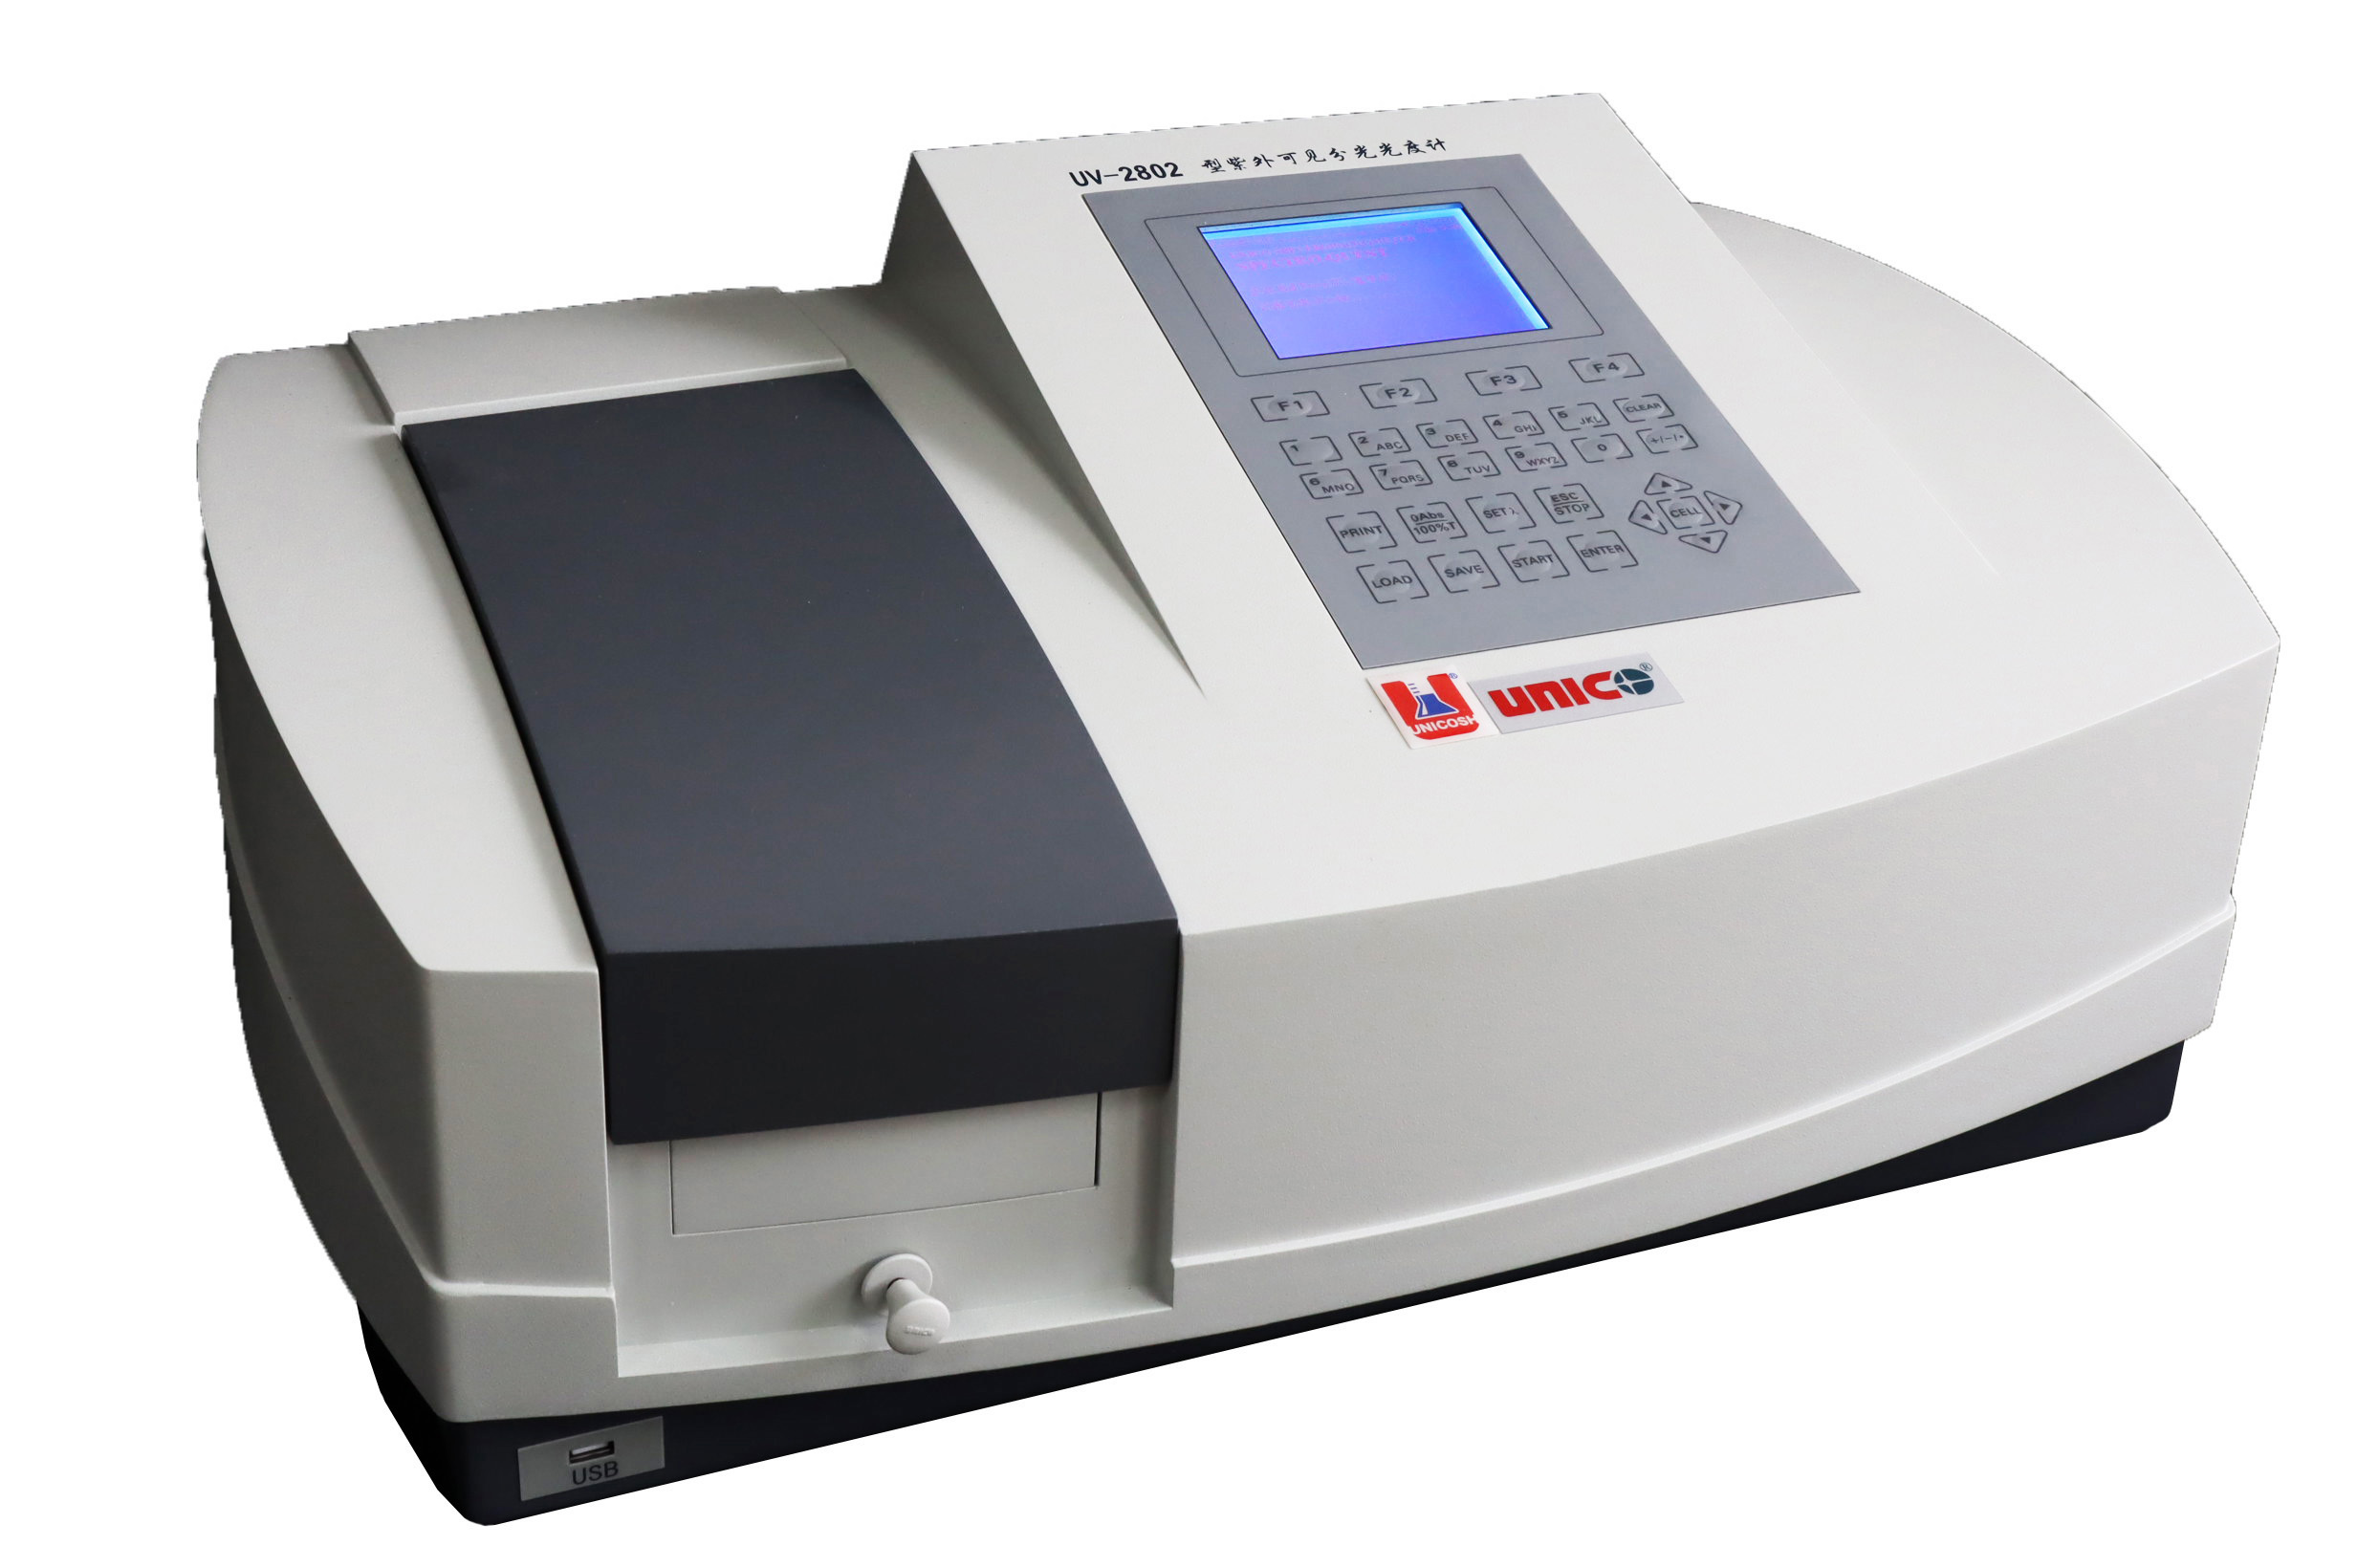 UV-2802扫描型紫外可见分光光度计（大屏幕LCD显示）